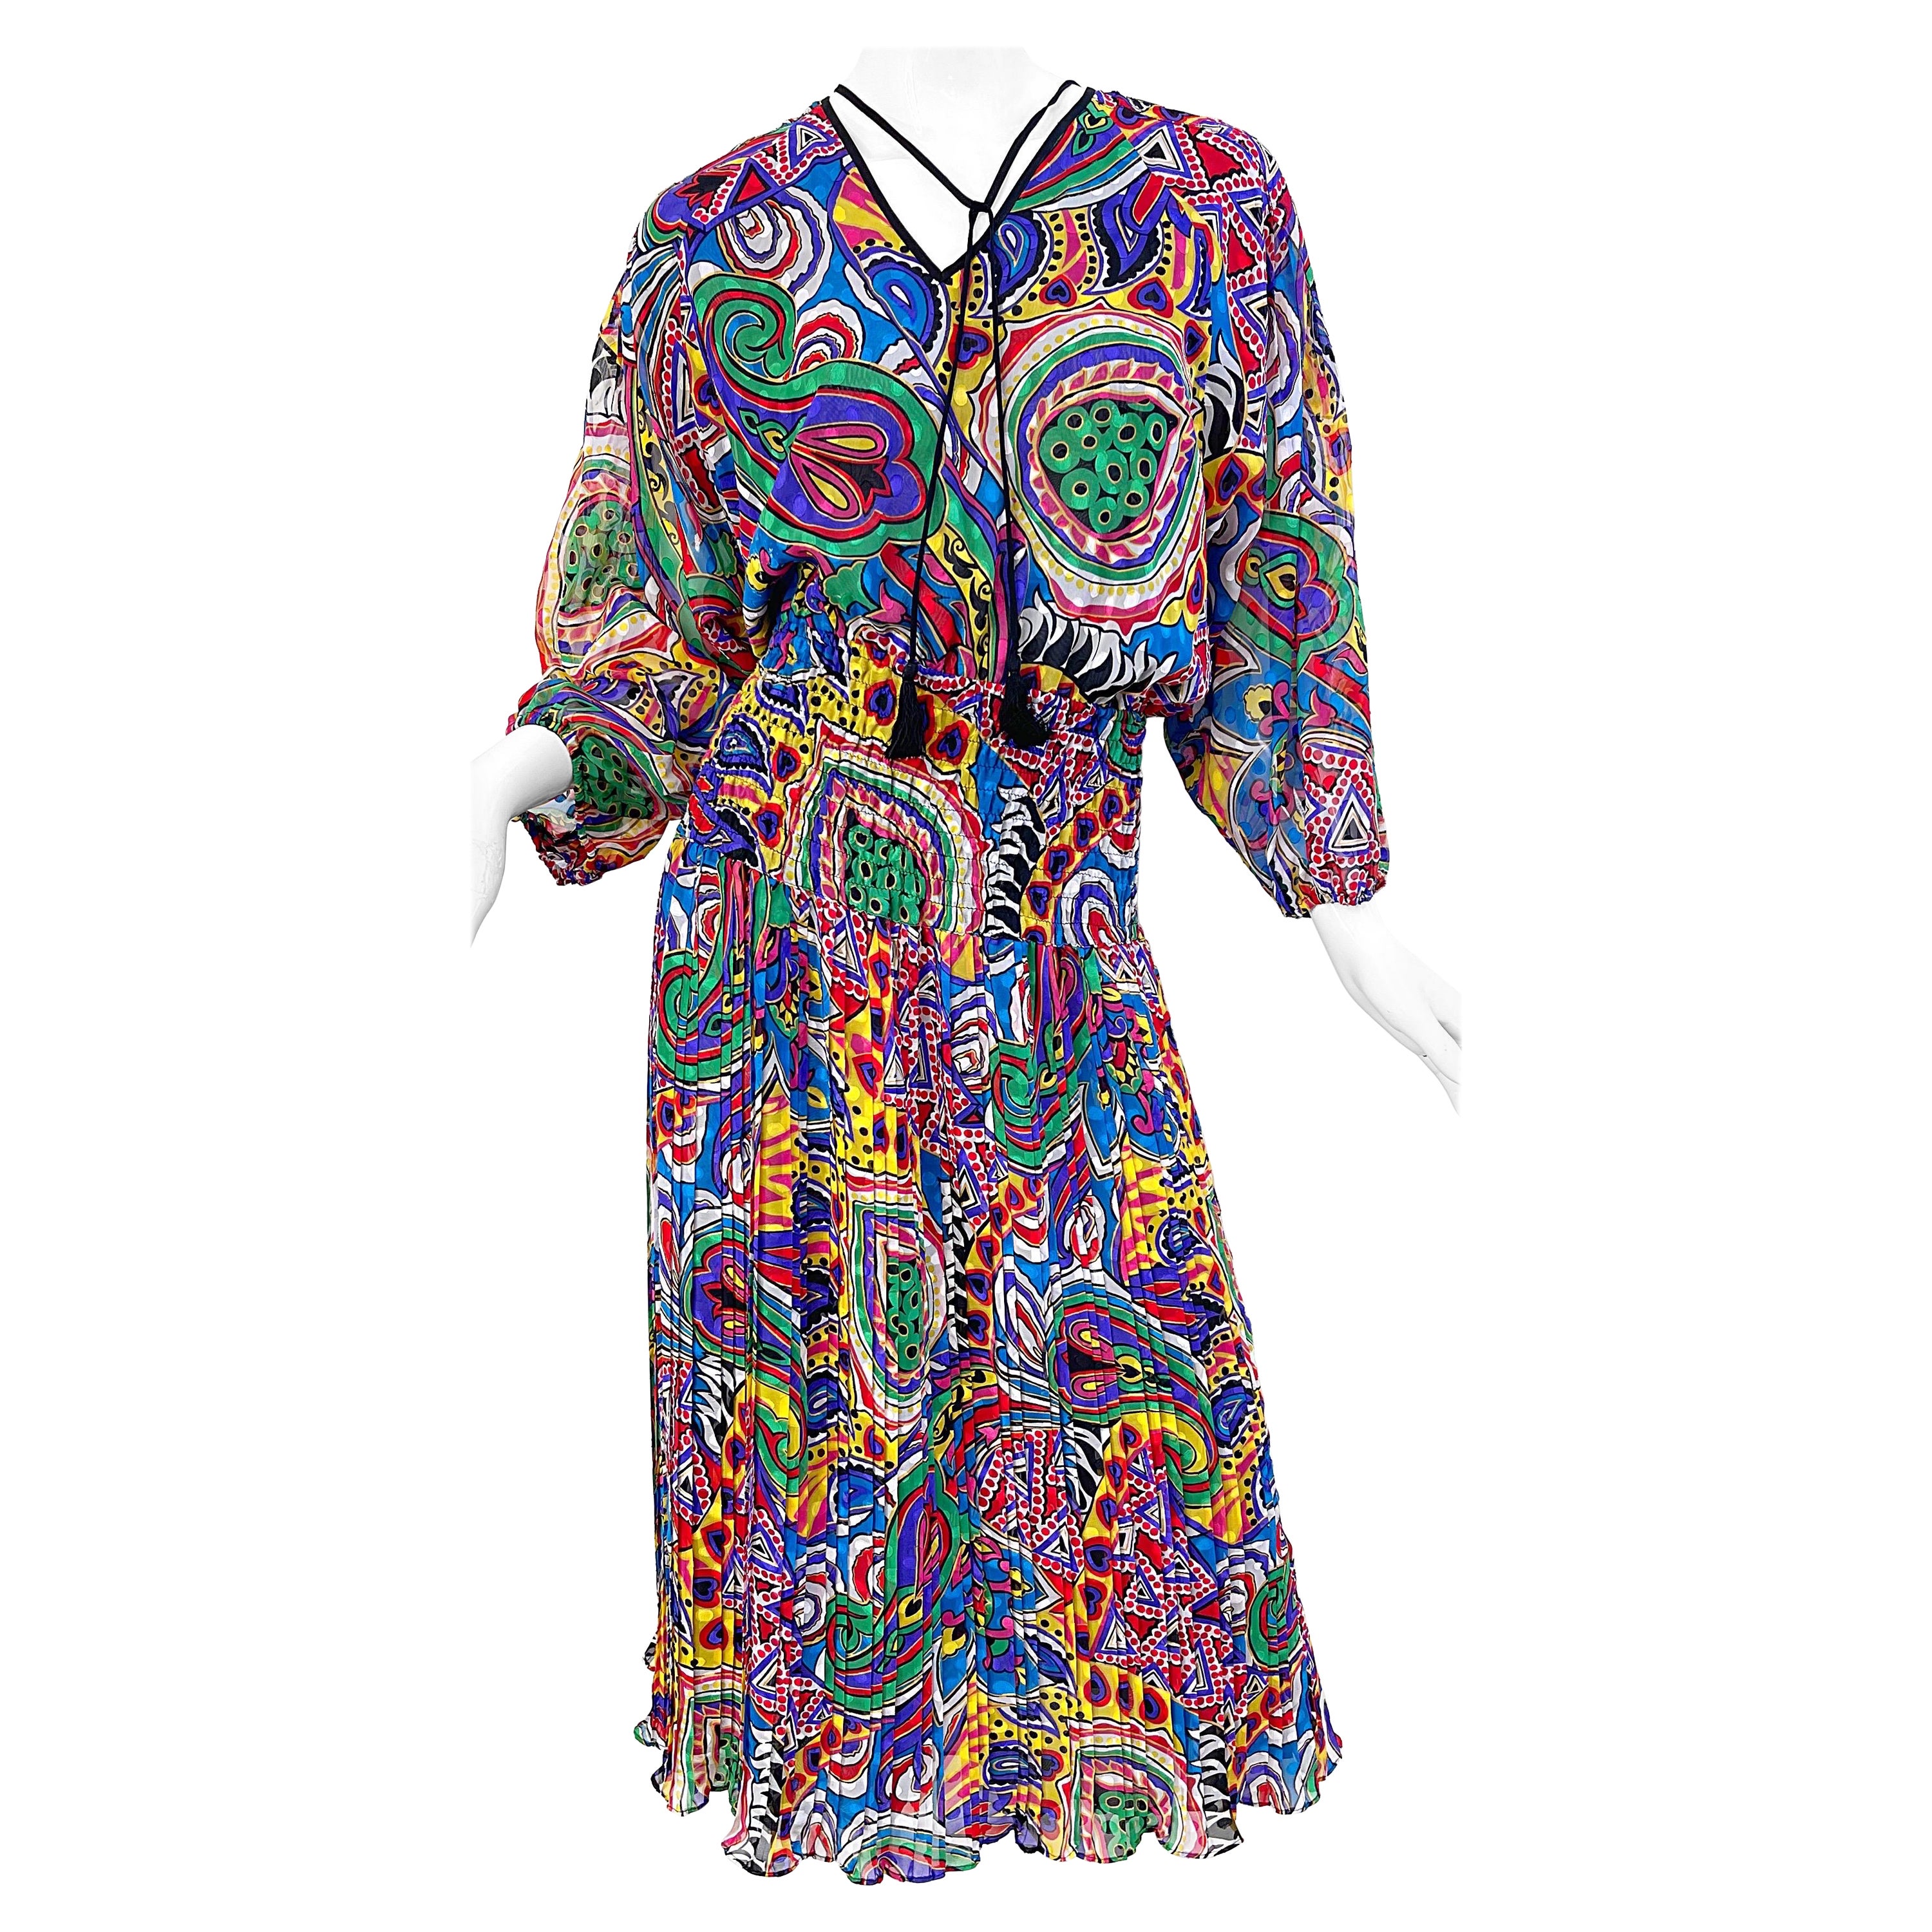 Diane Freis 1980er Jahre Neuheit Herz Paisley Psychedelic Print Vintage 80er Jahre Kleid